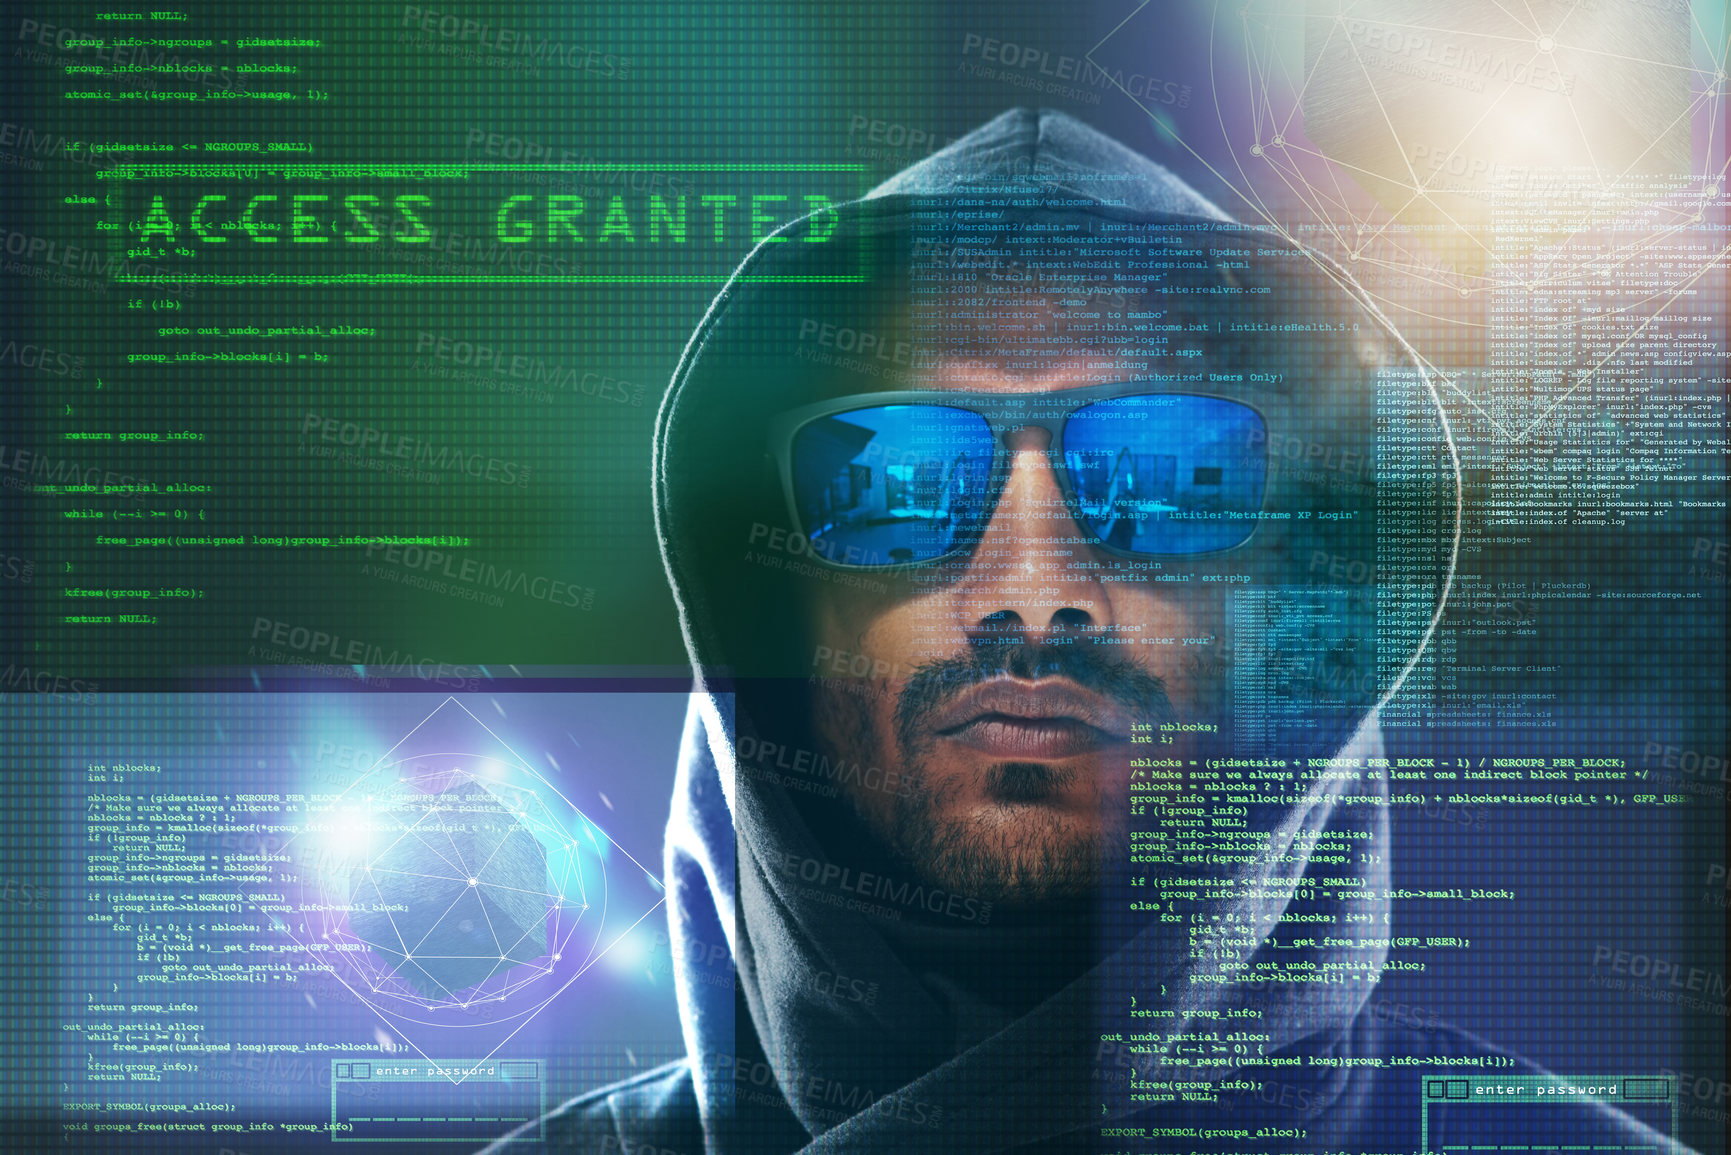 Buy stock photo Portrait of a menacing computer hacker posing against a dark background in studio